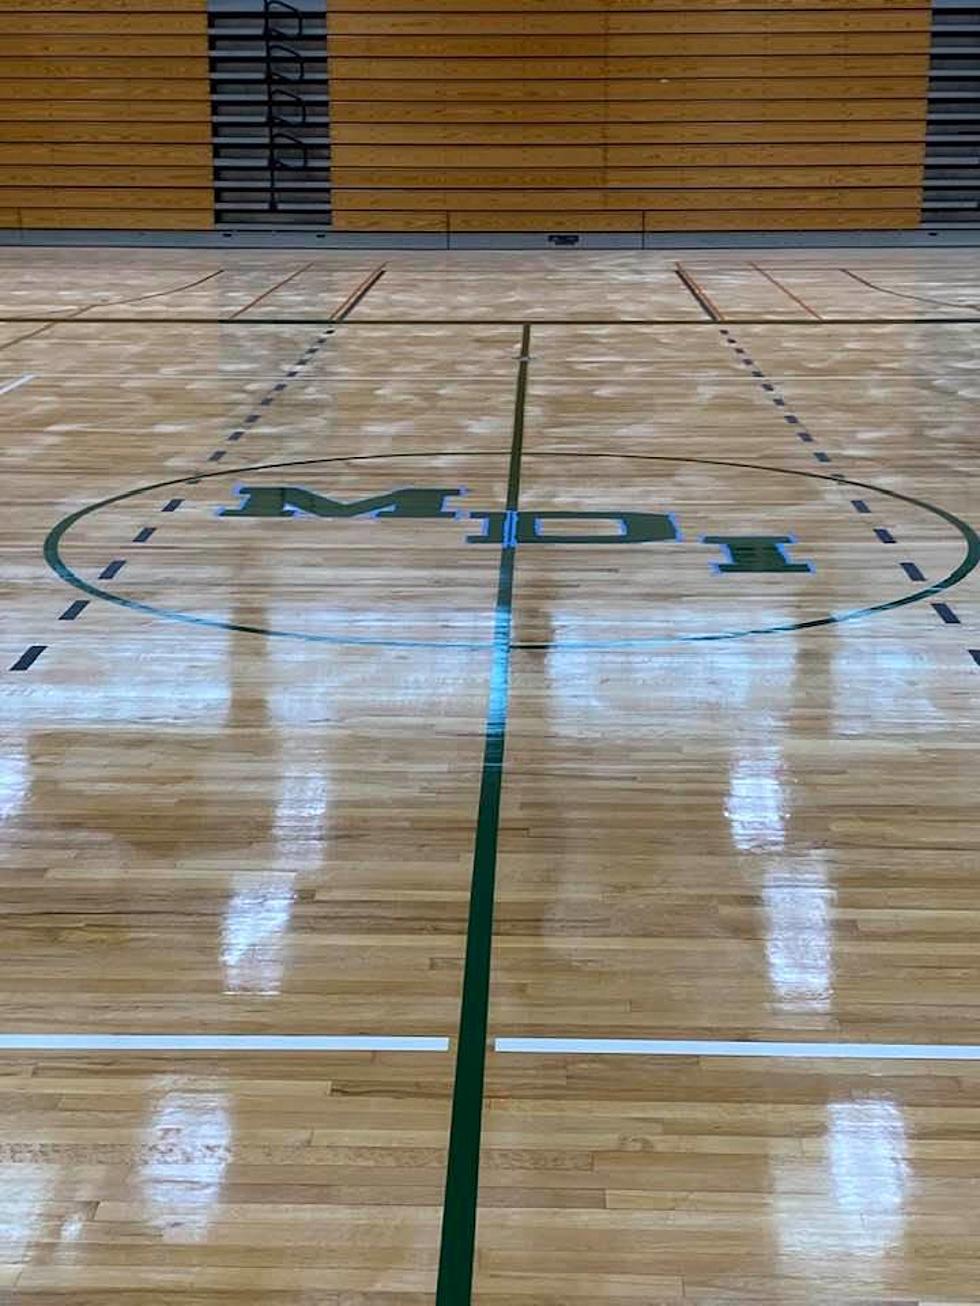 MDI High School’s Bernard Parady Gymnasium Received a Facelift [PHOTOS]